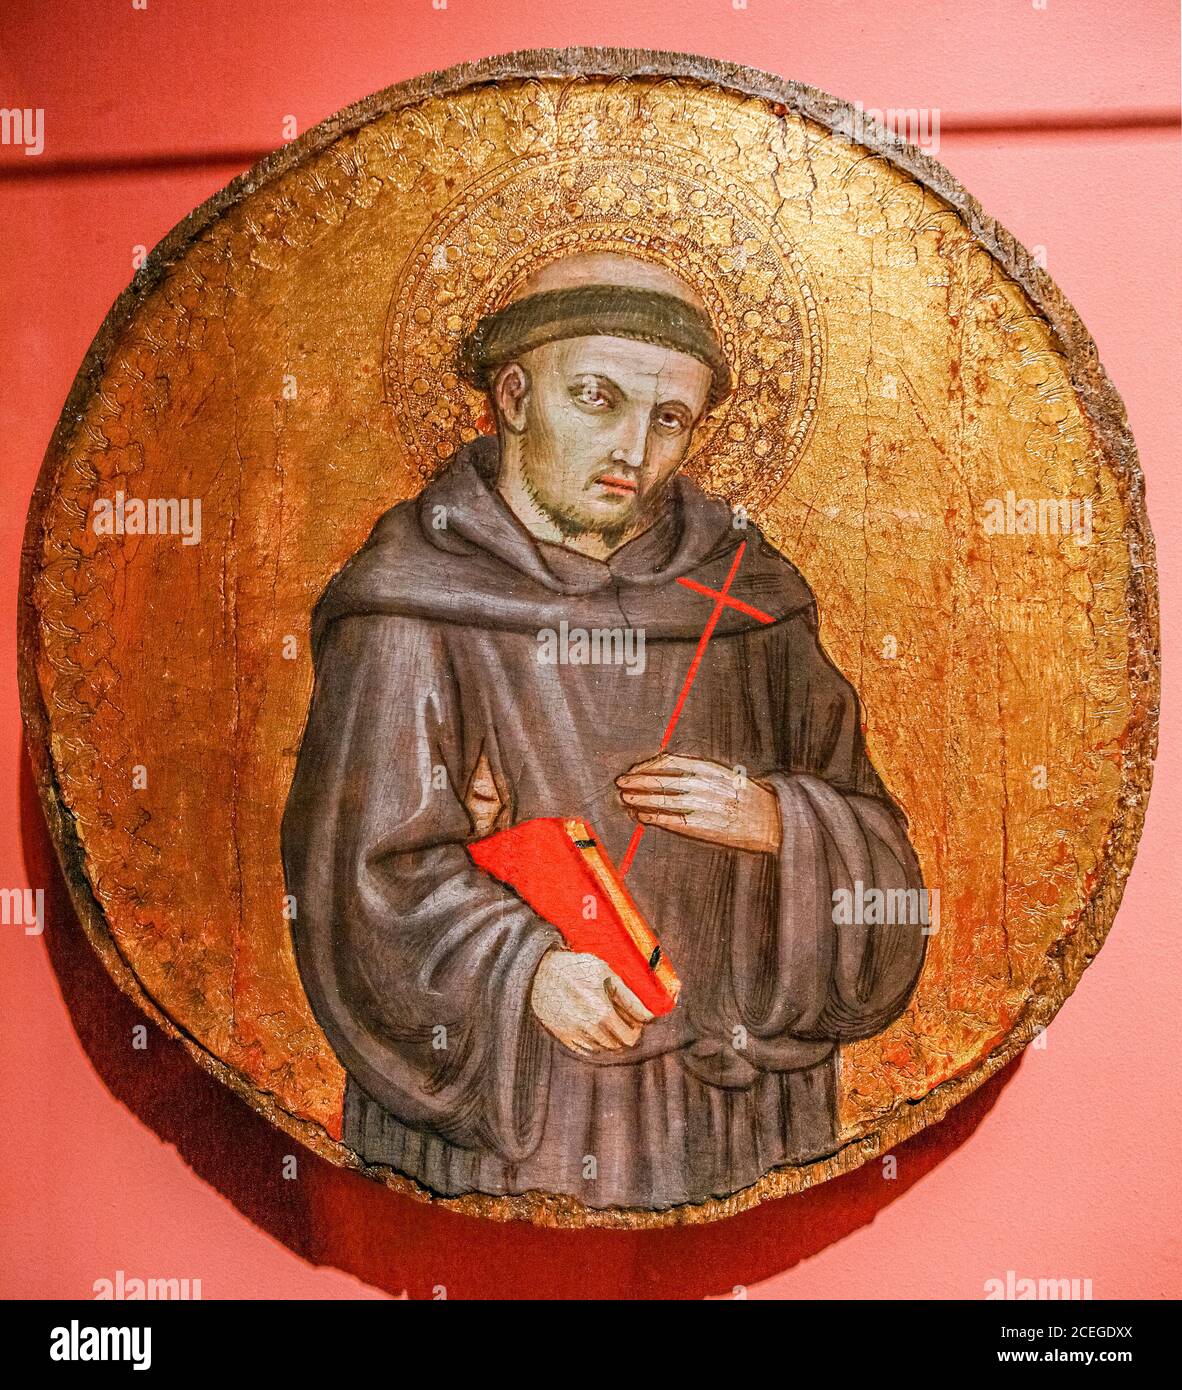 Italy Umbria Perugia - National Gallery of Umbria: Monographic Exhibition  (1362-1422) -  St. Francis Stock Photo